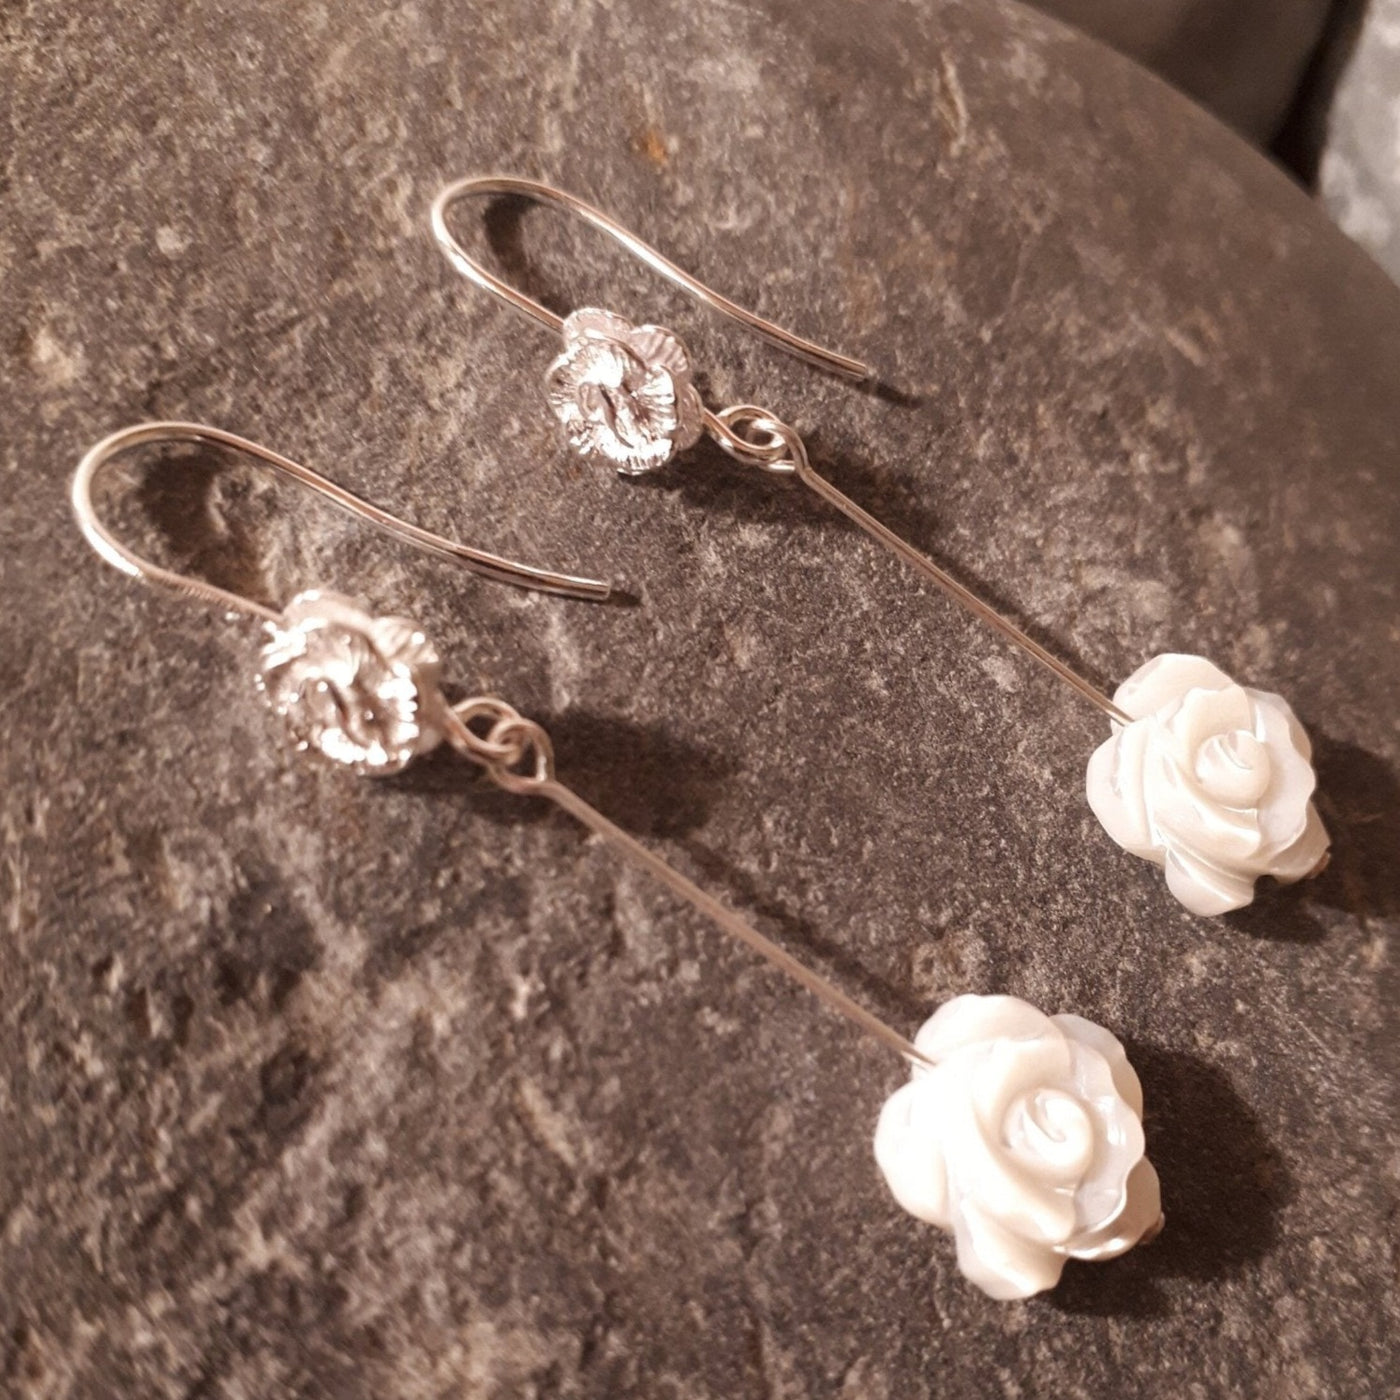 925 Sterling Silver Rose Carved Shell Earrings. - JOANNE MASSEY ARTISAN JEWELLERY